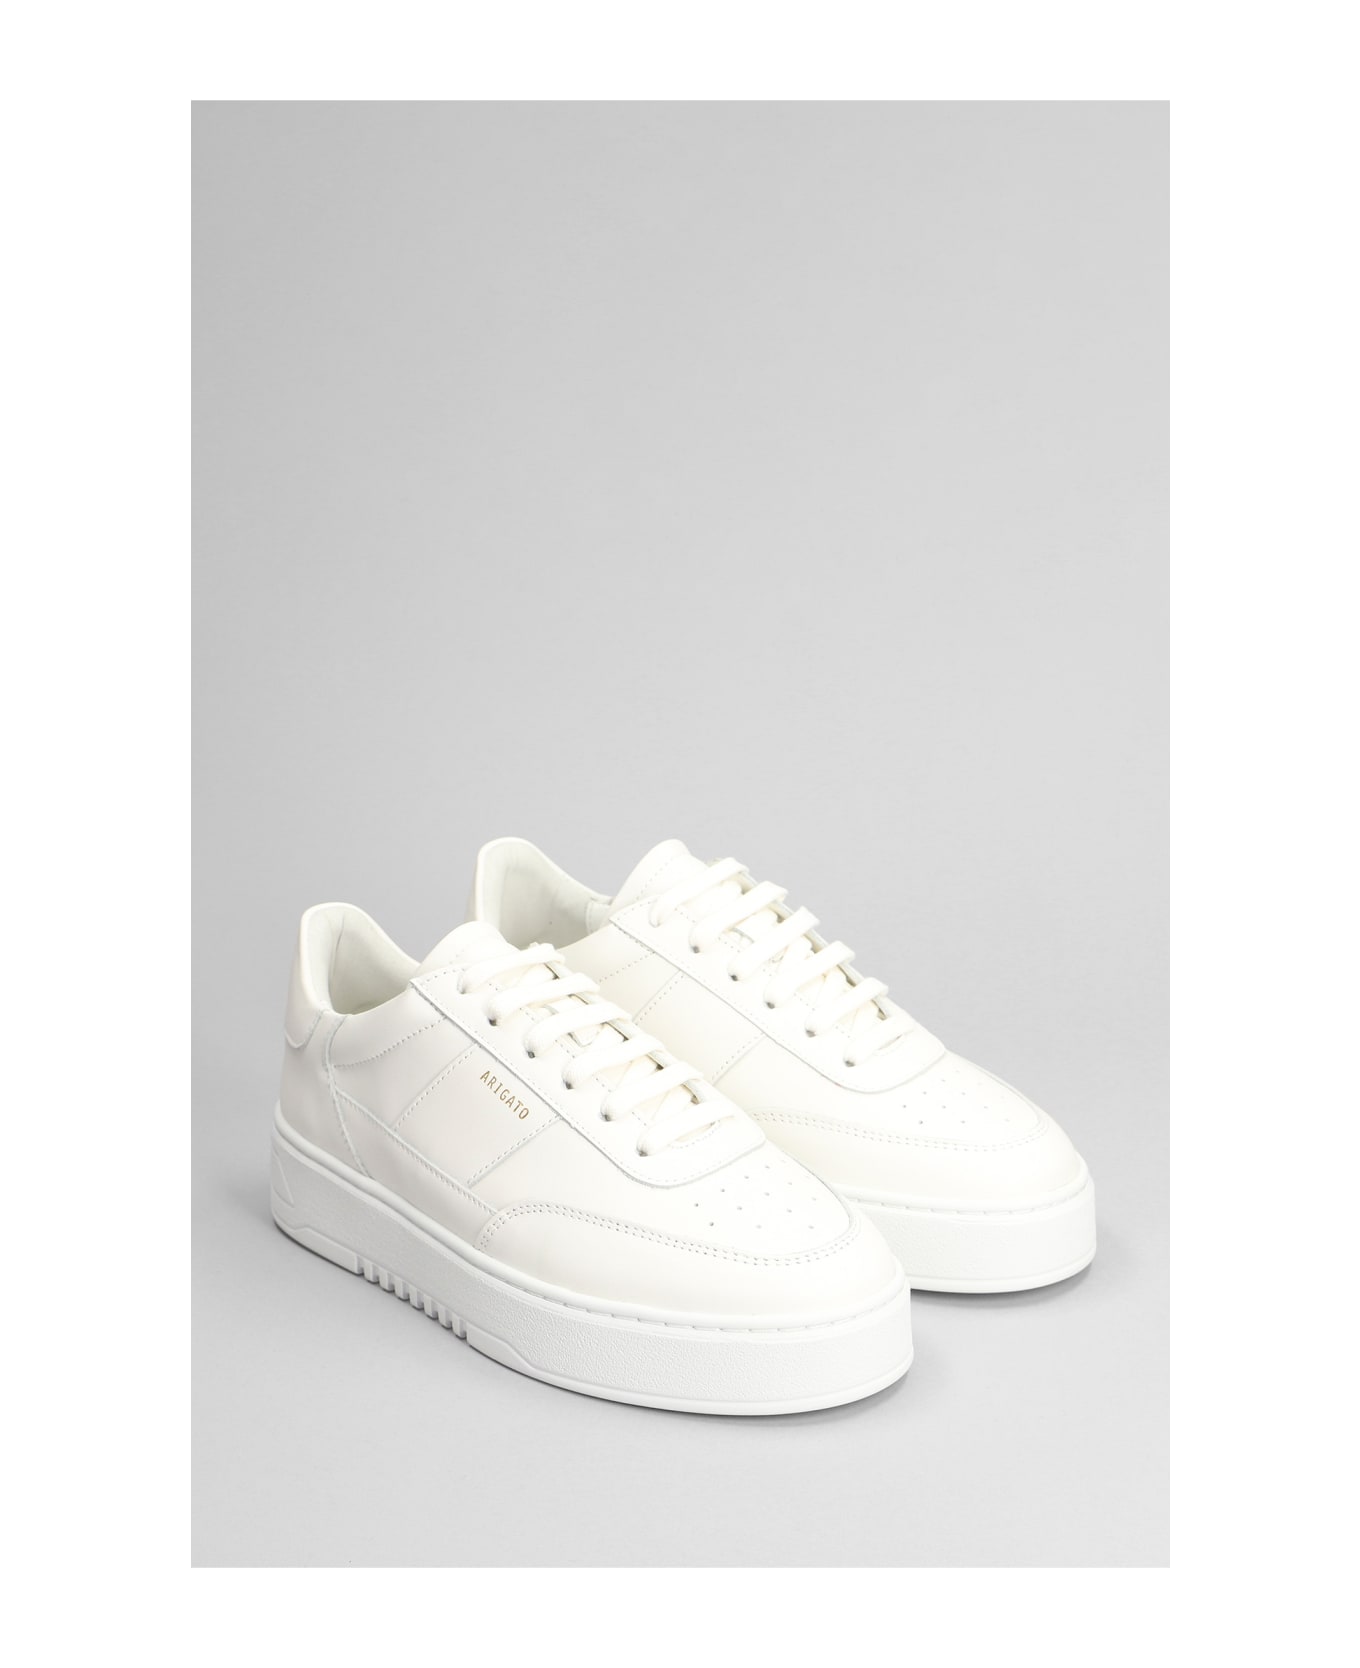 Axel Arigato Orbit Sneakers In White Leather - Bianco